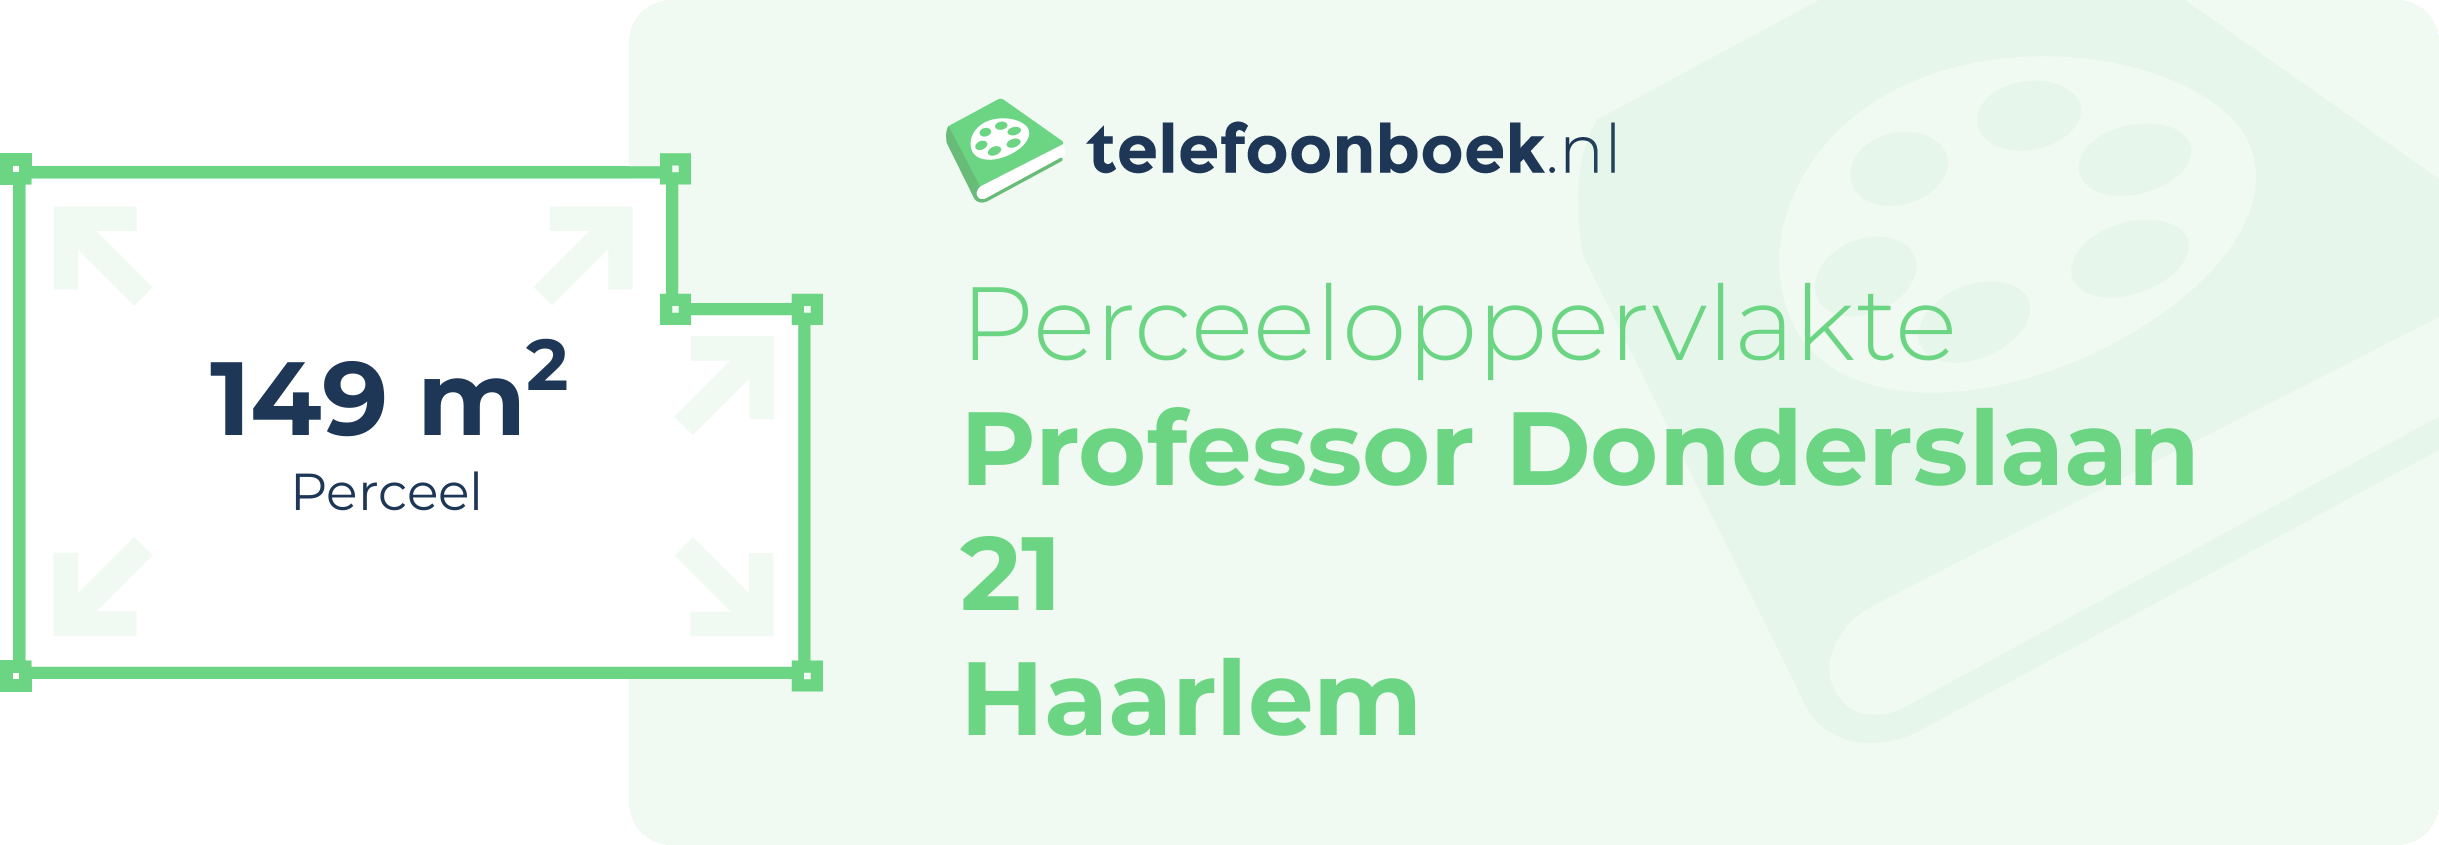 Perceeloppervlakte Professor Donderslaan 21 Haarlem